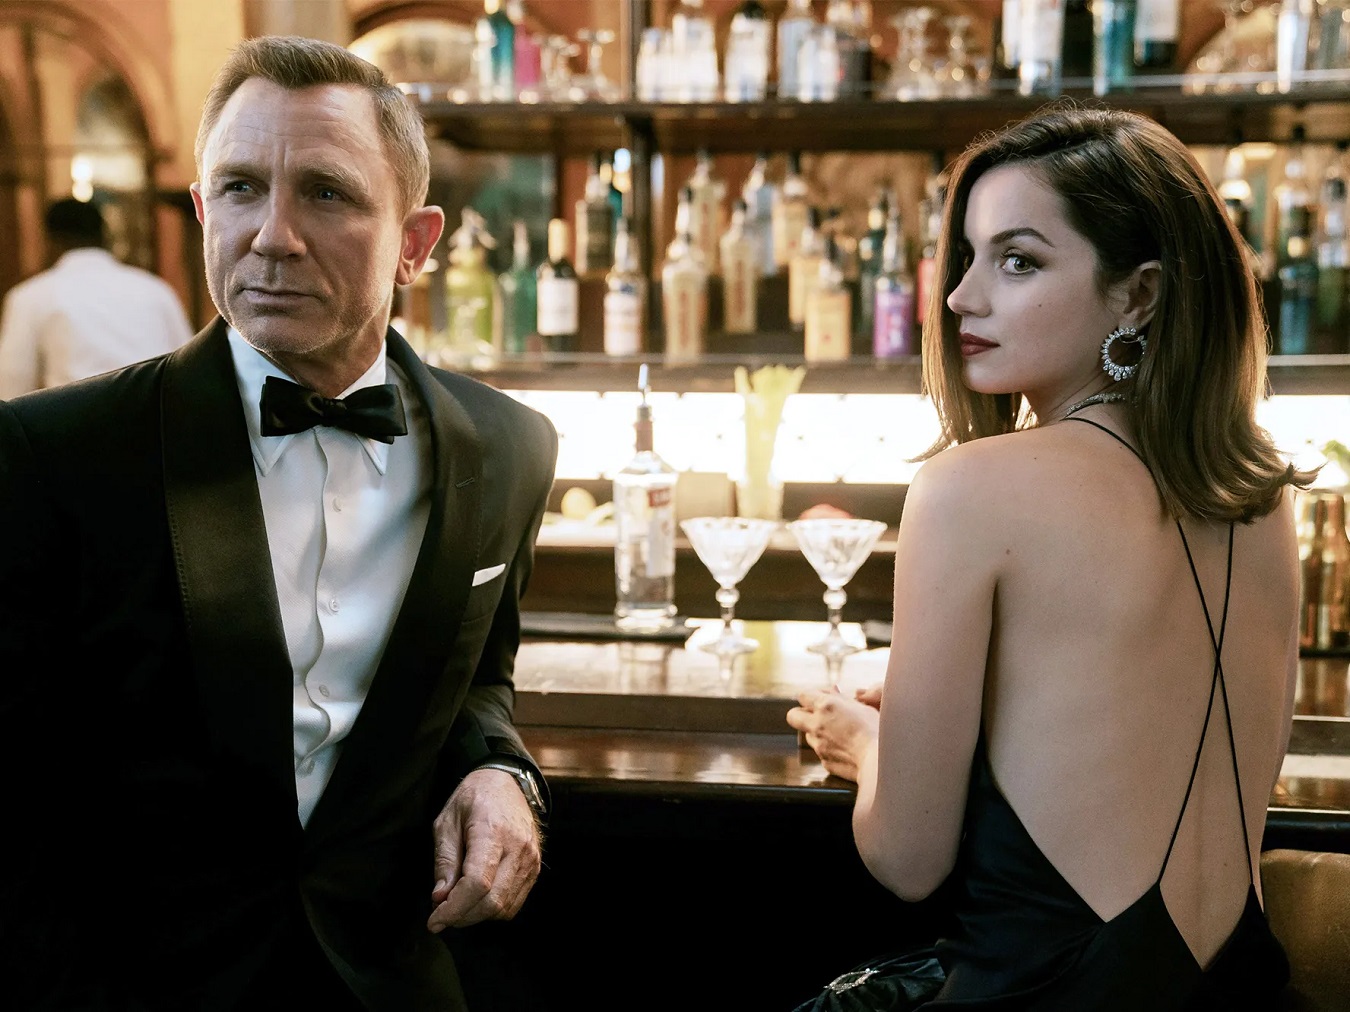 People 1350x1012 Ana de Armas Daniel Craig actor actress bar No Time To Die 007 James Bond women men Spanish women